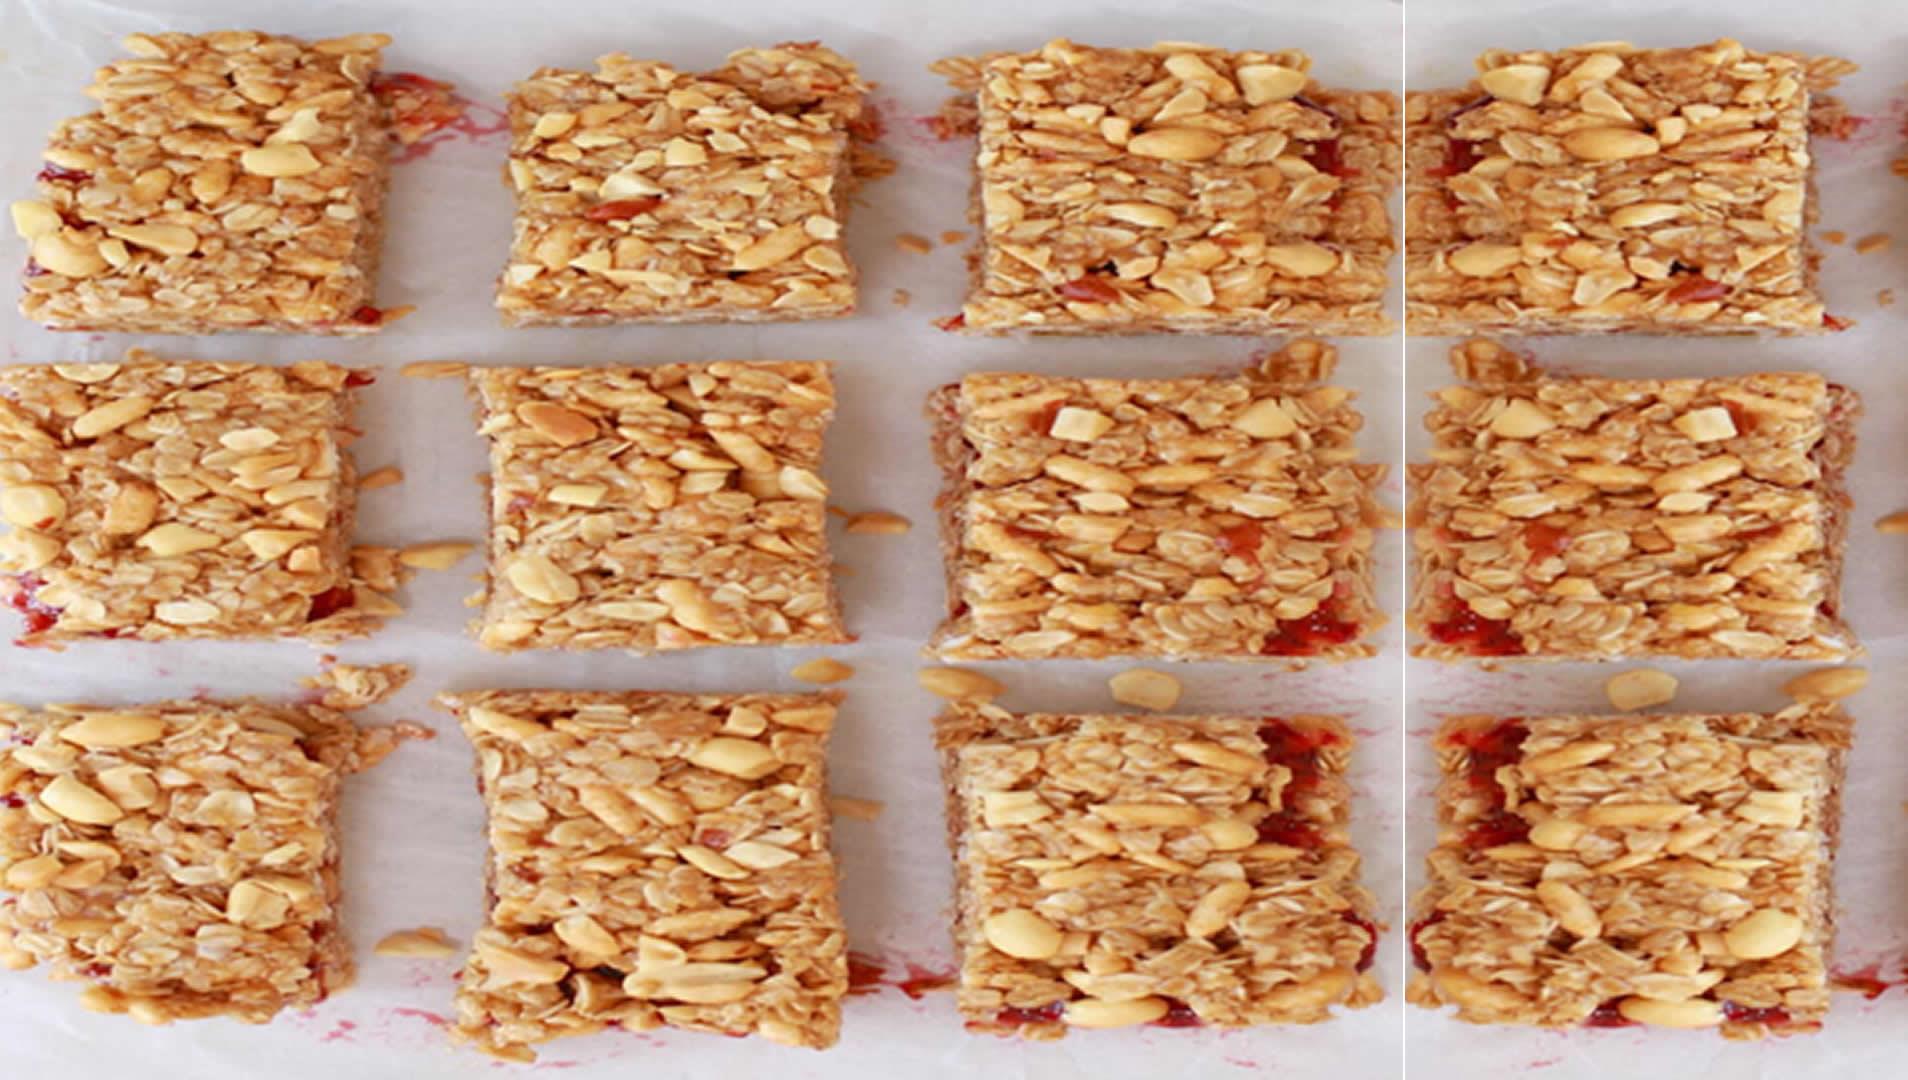 Peanut butter granola bars – Y4